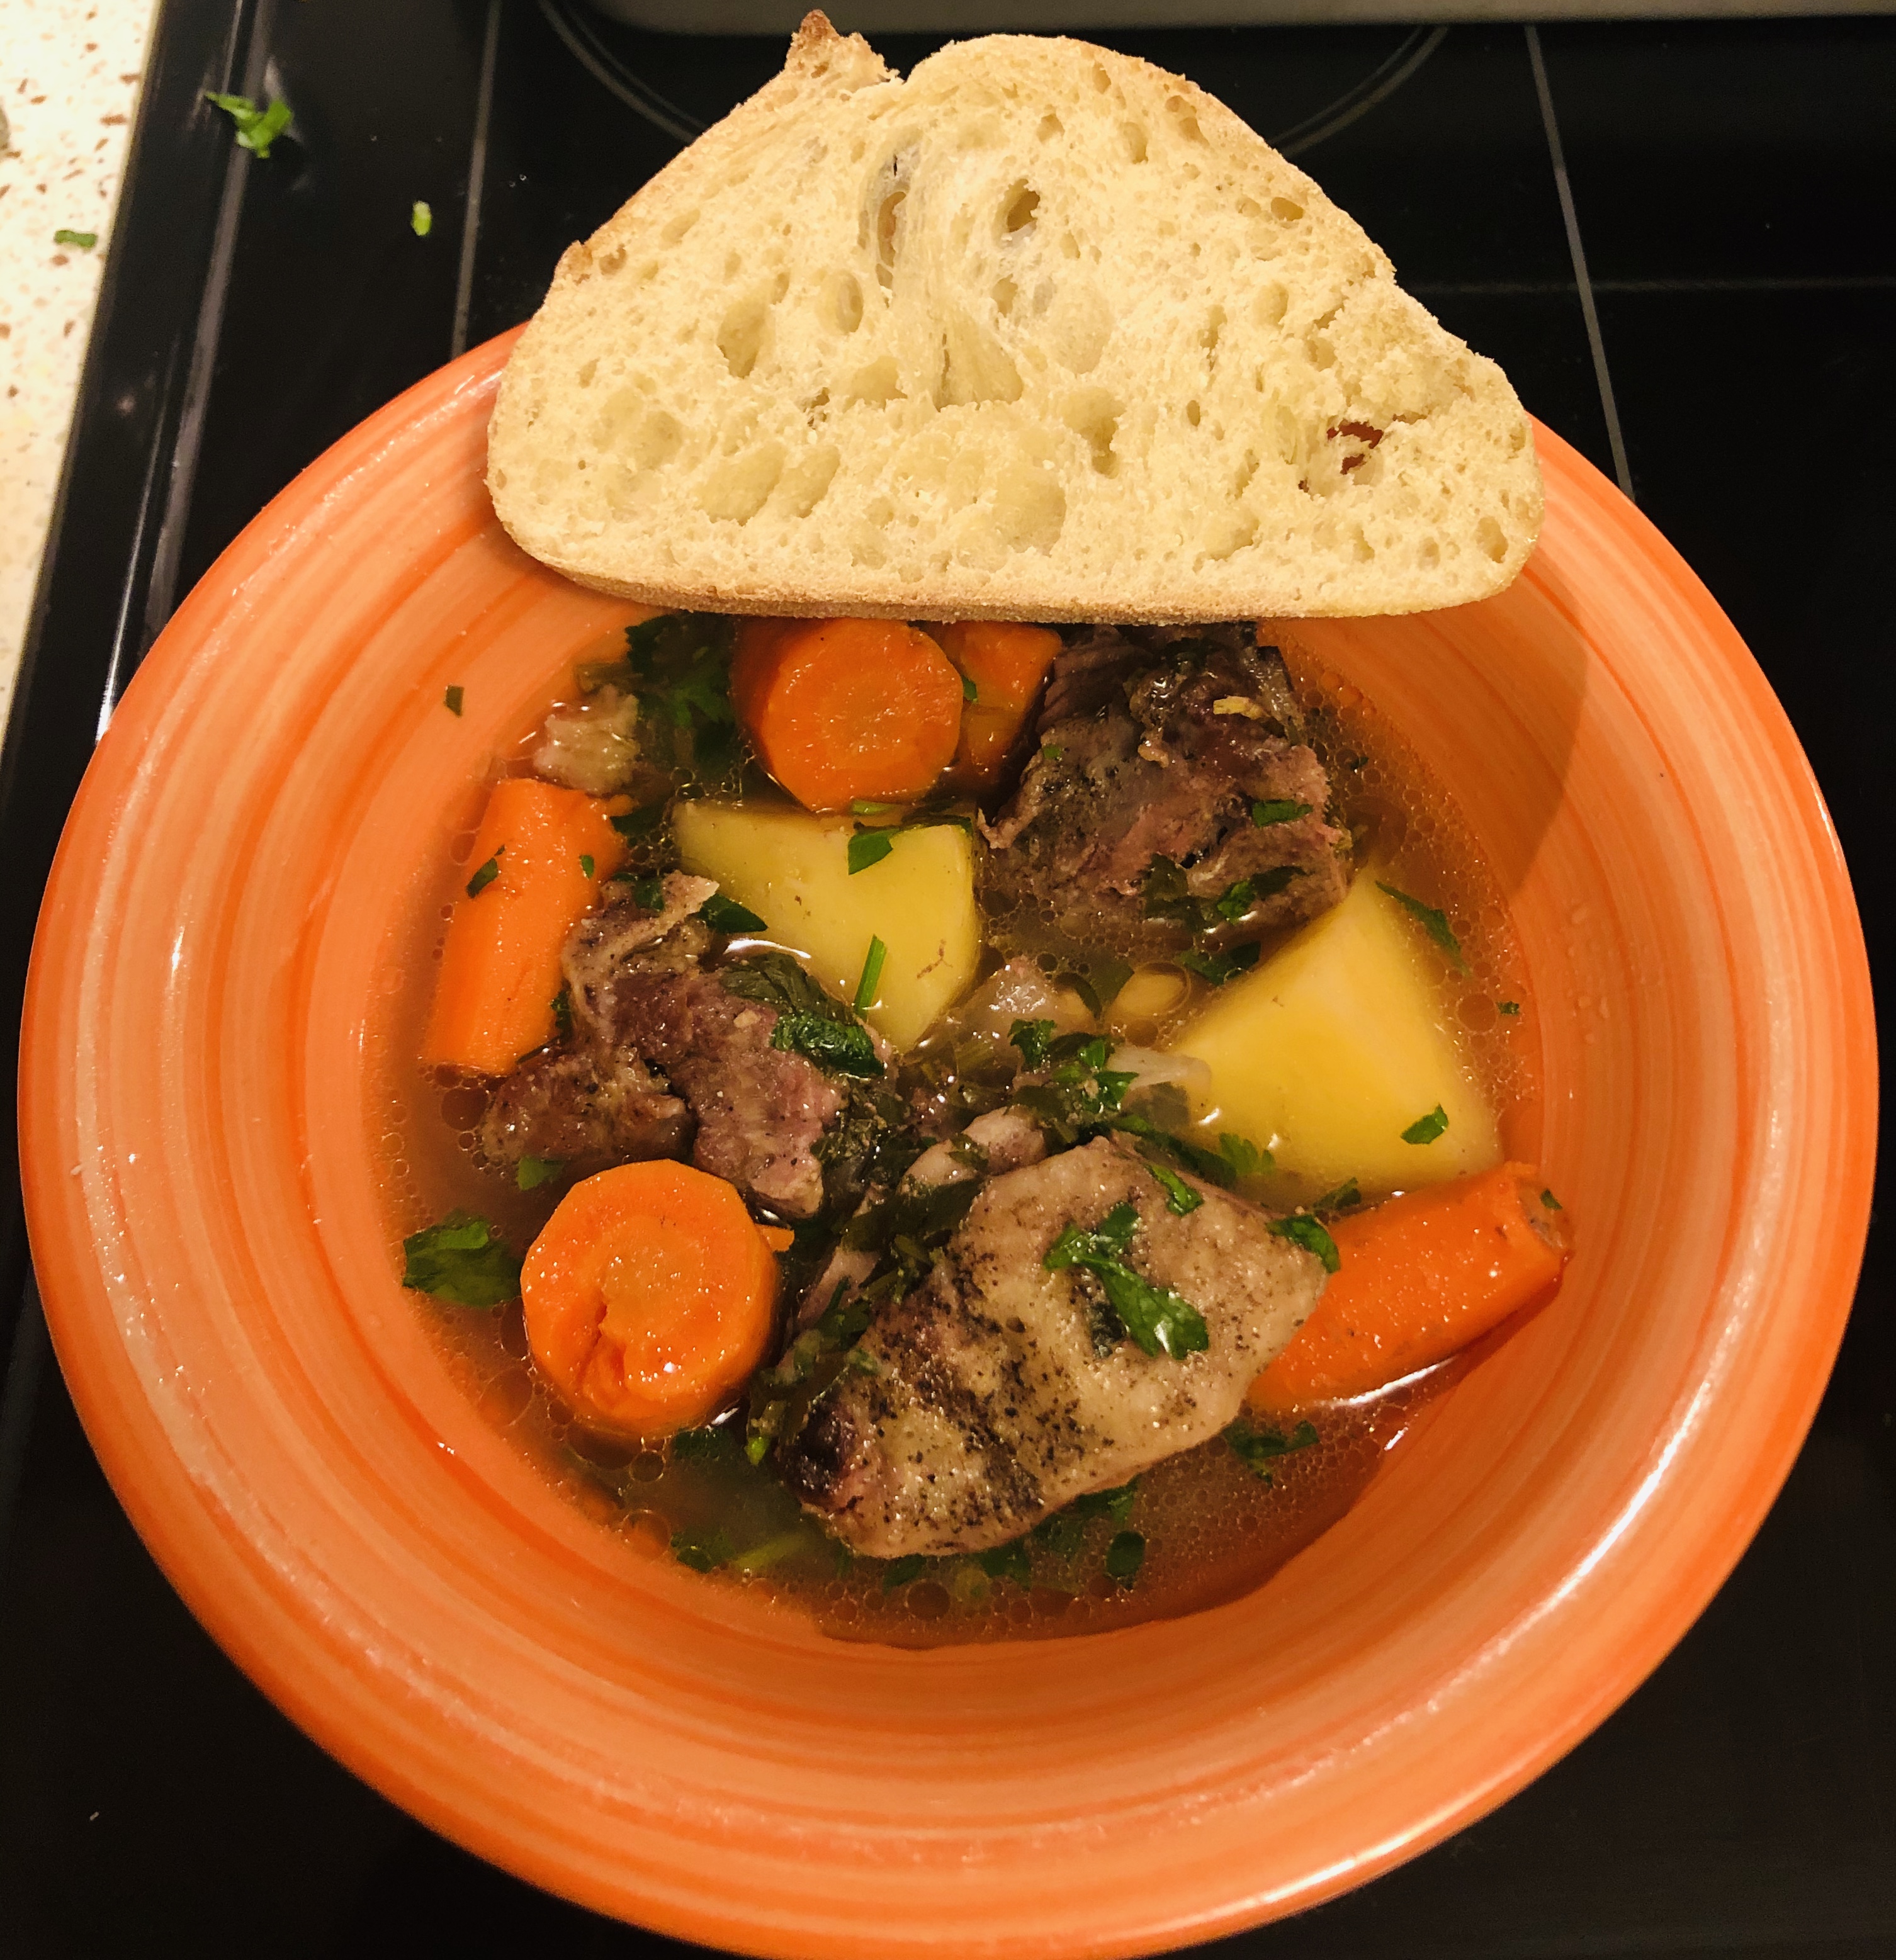 Irish-Style Lamb Stew